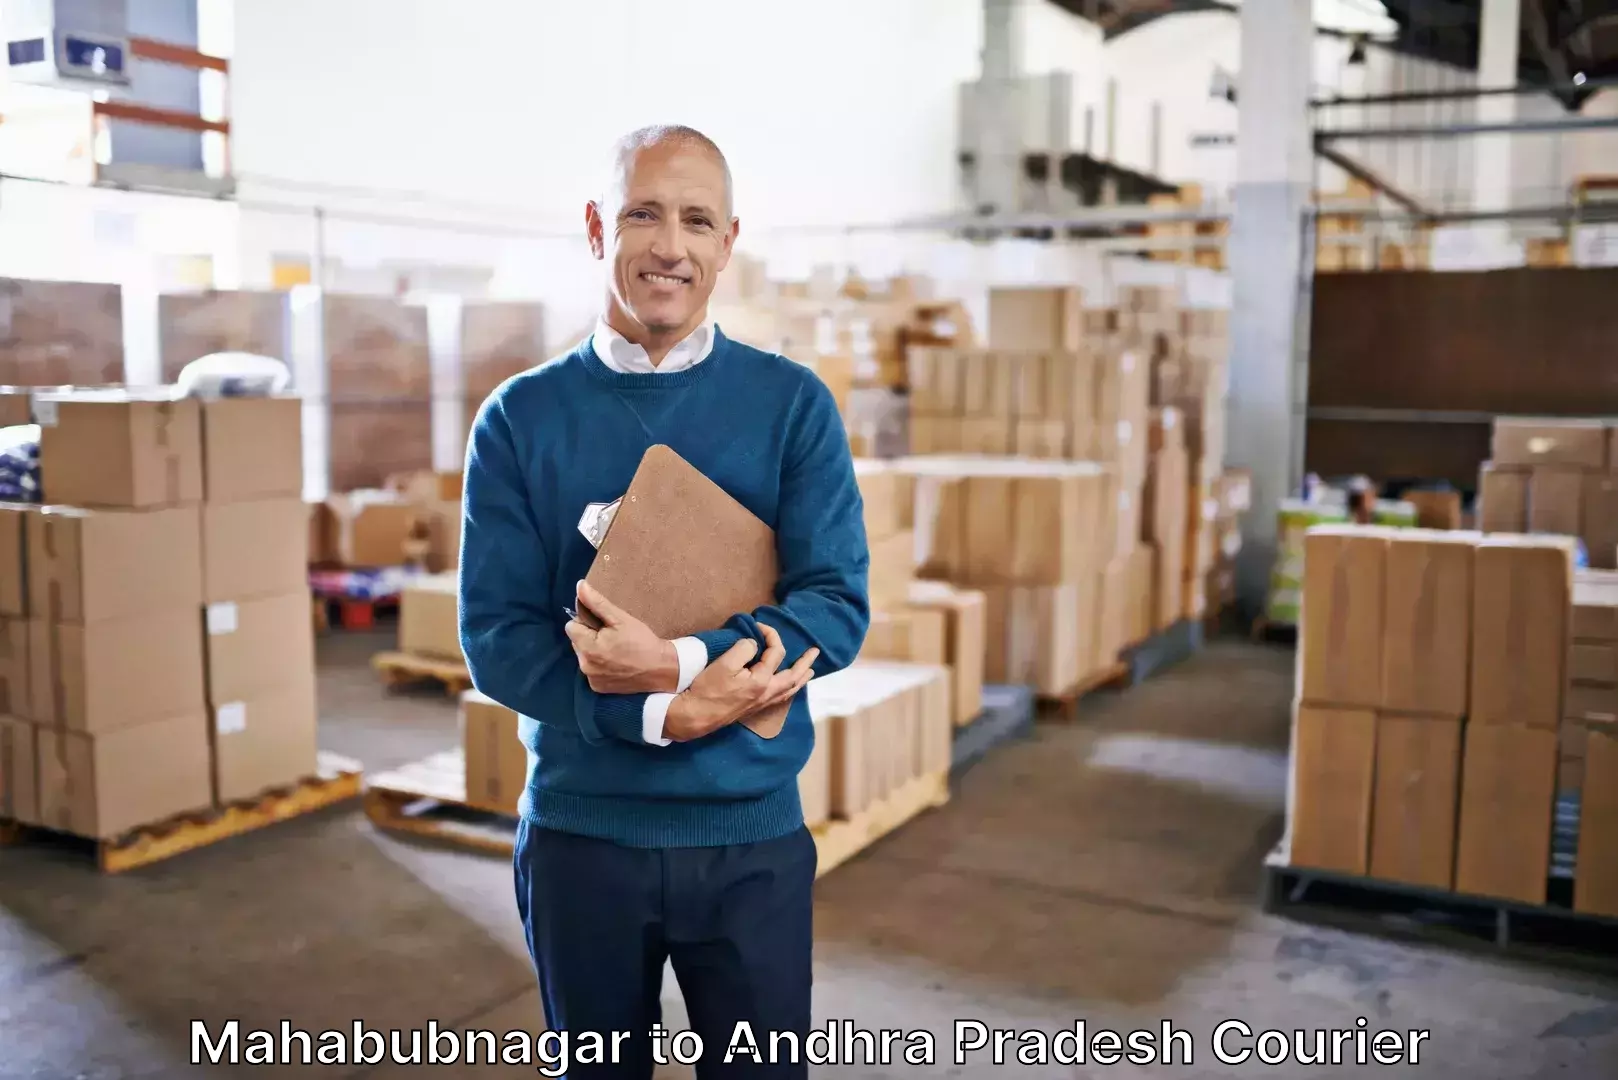 Luggage shipment specialists Mahabubnagar to Andhra Pradesh